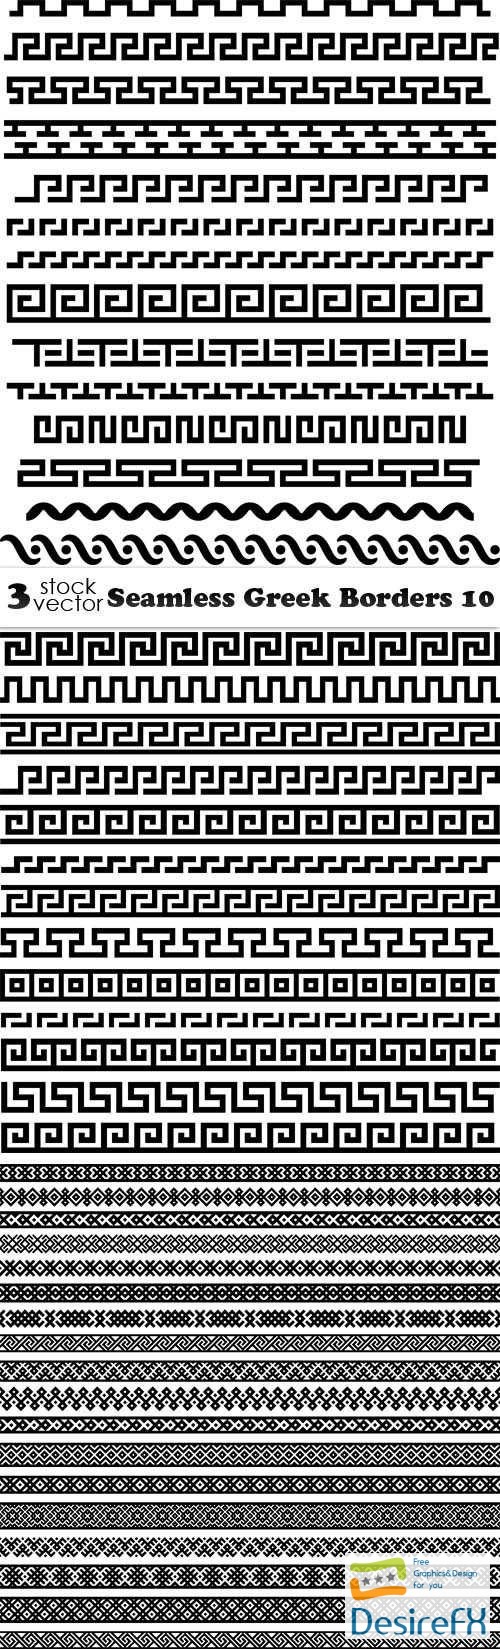 Seamless Greek Borders 10